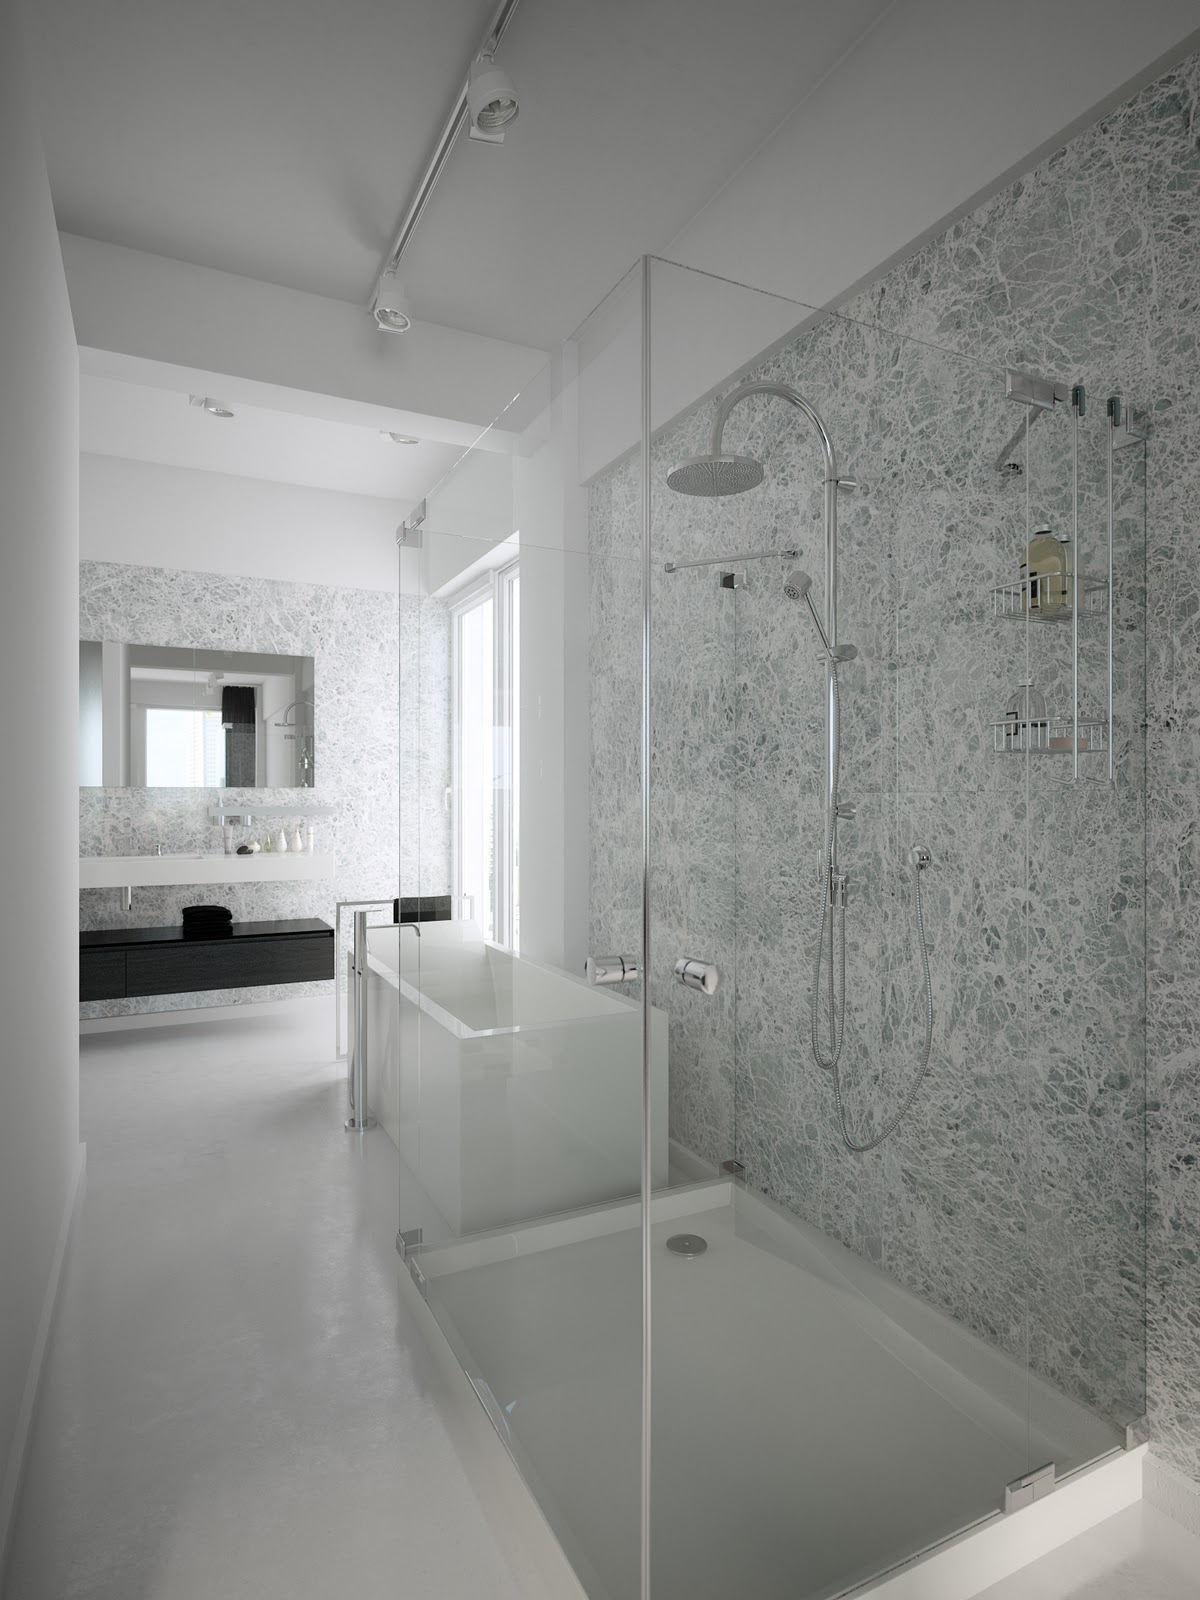 Luxury bathroom design "width =" 1200 "height =" 1600 "srcset =" https://mileray.com/wp-content/uploads/2020/05/1588516472_921_Trendy-Bathroom-Design-Ideas-Combined-With-White-Color-Decor-Showing.jpg 1200w, https://mileray.com/ wp-content / uploads / 2016/09 / Sergey-Baskakov1-225x300.jpg 225w, https://mileray.com/wp-content/uploads/2016/09/Sergey-Baskakov1-768x1024.jpg 768w, https: // mileray.com/wp-content/uploads/2016/09/Sergey-Baskakov1-696x928.jpg 696w, https://mileray.com/wp-content/uploads/2016/09/Sergey-Baskakov1-1068x1424.jpg 1068w, https://mileray.com/wp-content/uploads/2016/09/Sergey-Baskakov1-315x420.jpg 315w "sizes =" (maximum width: 1200px) 100vw, 1200px